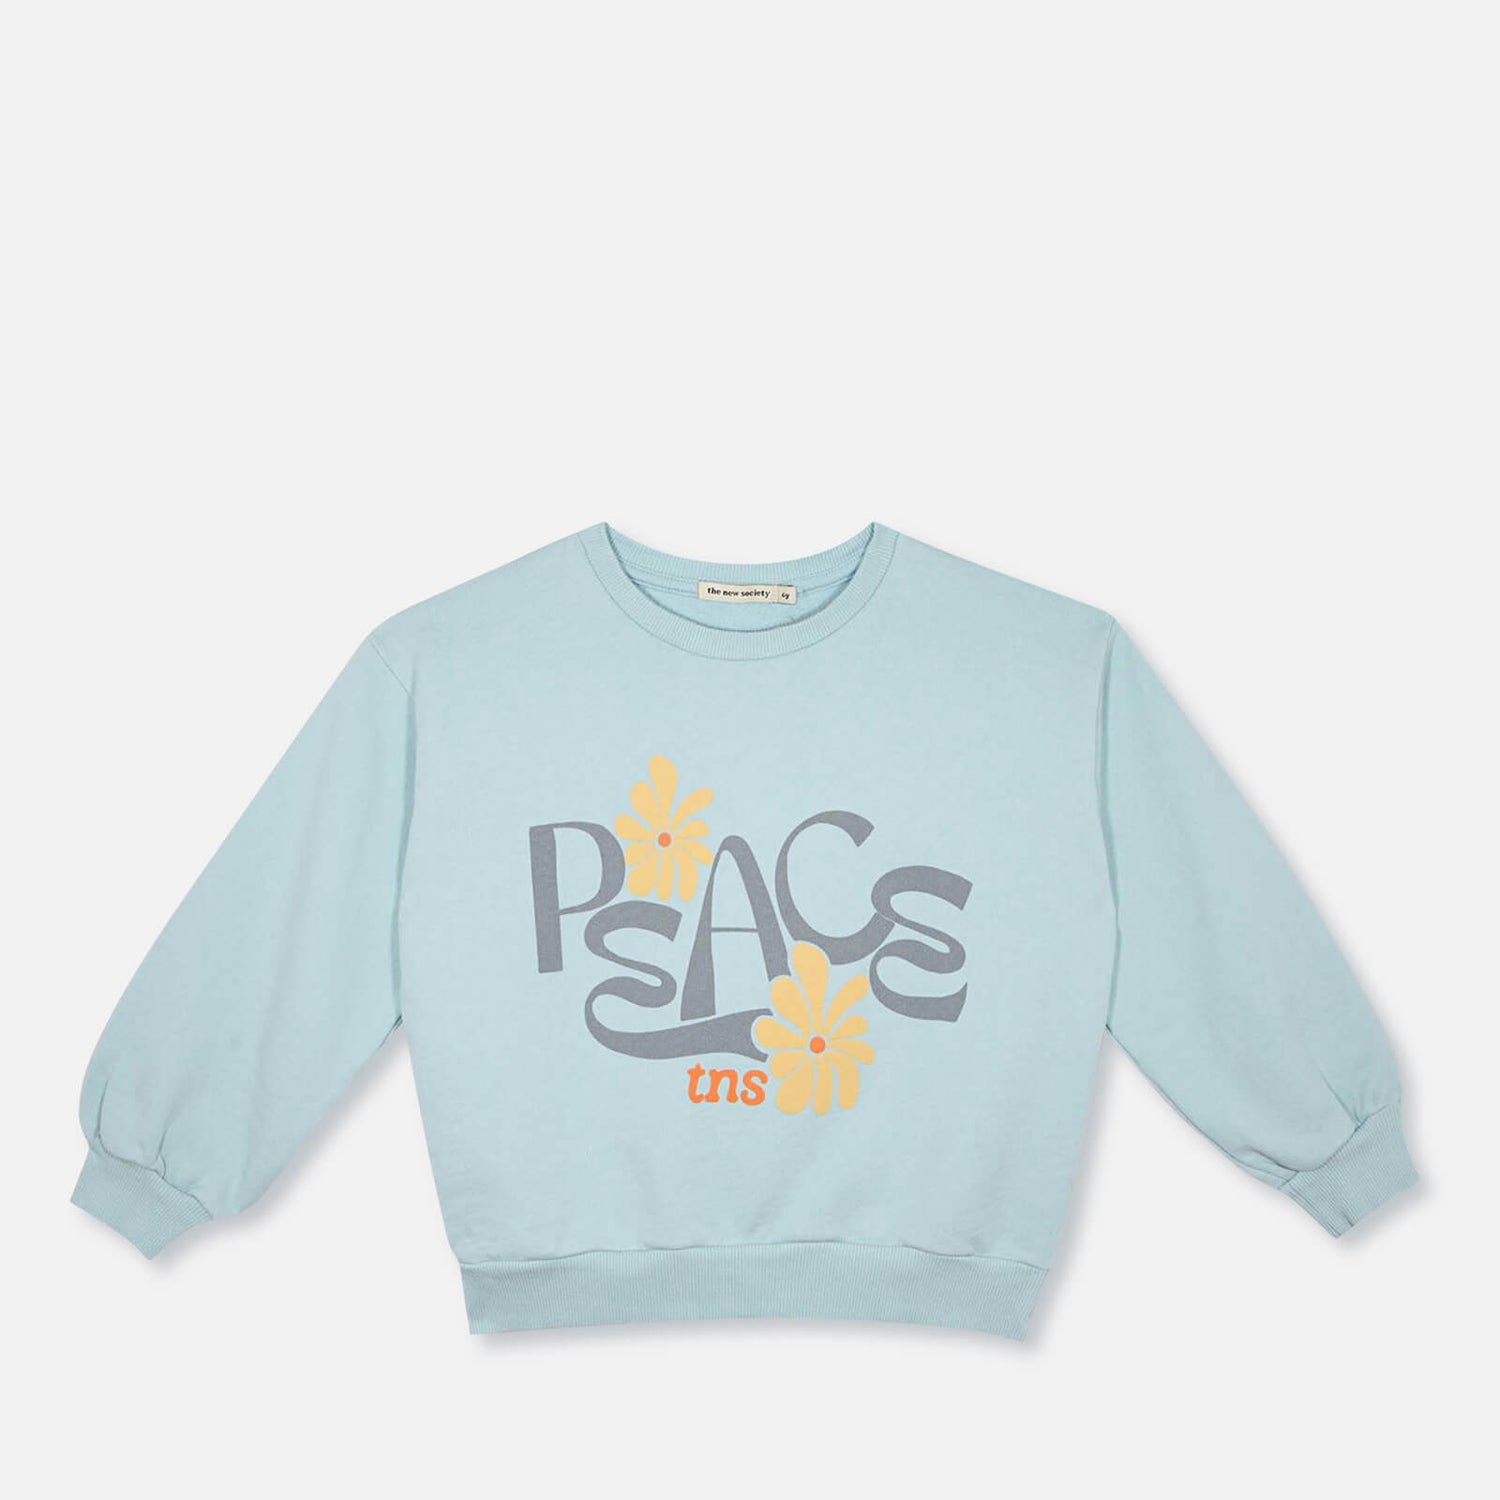 The New Society Kids' Lapace Printed Cotton Sweatshirt